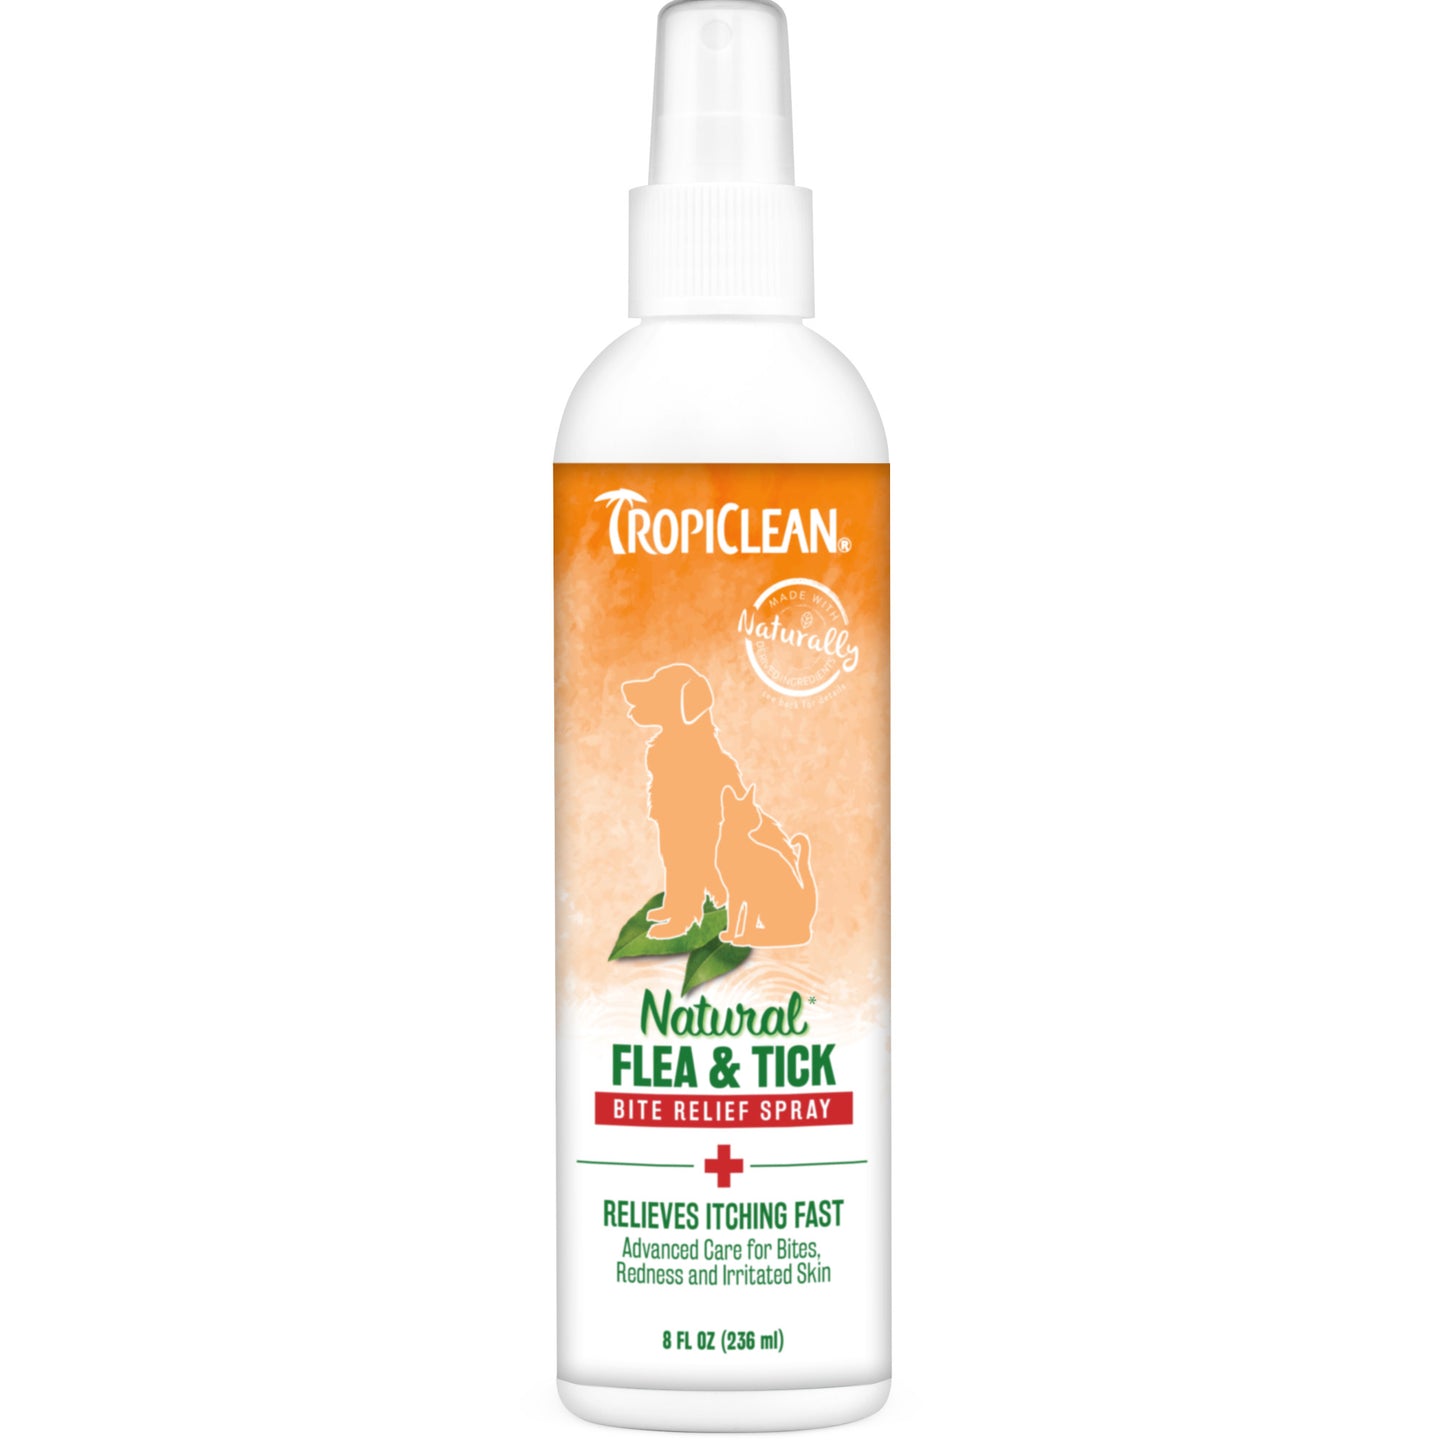 Tropiclean Flea & Tick Bite Relief 8-oz Spray, For Pets